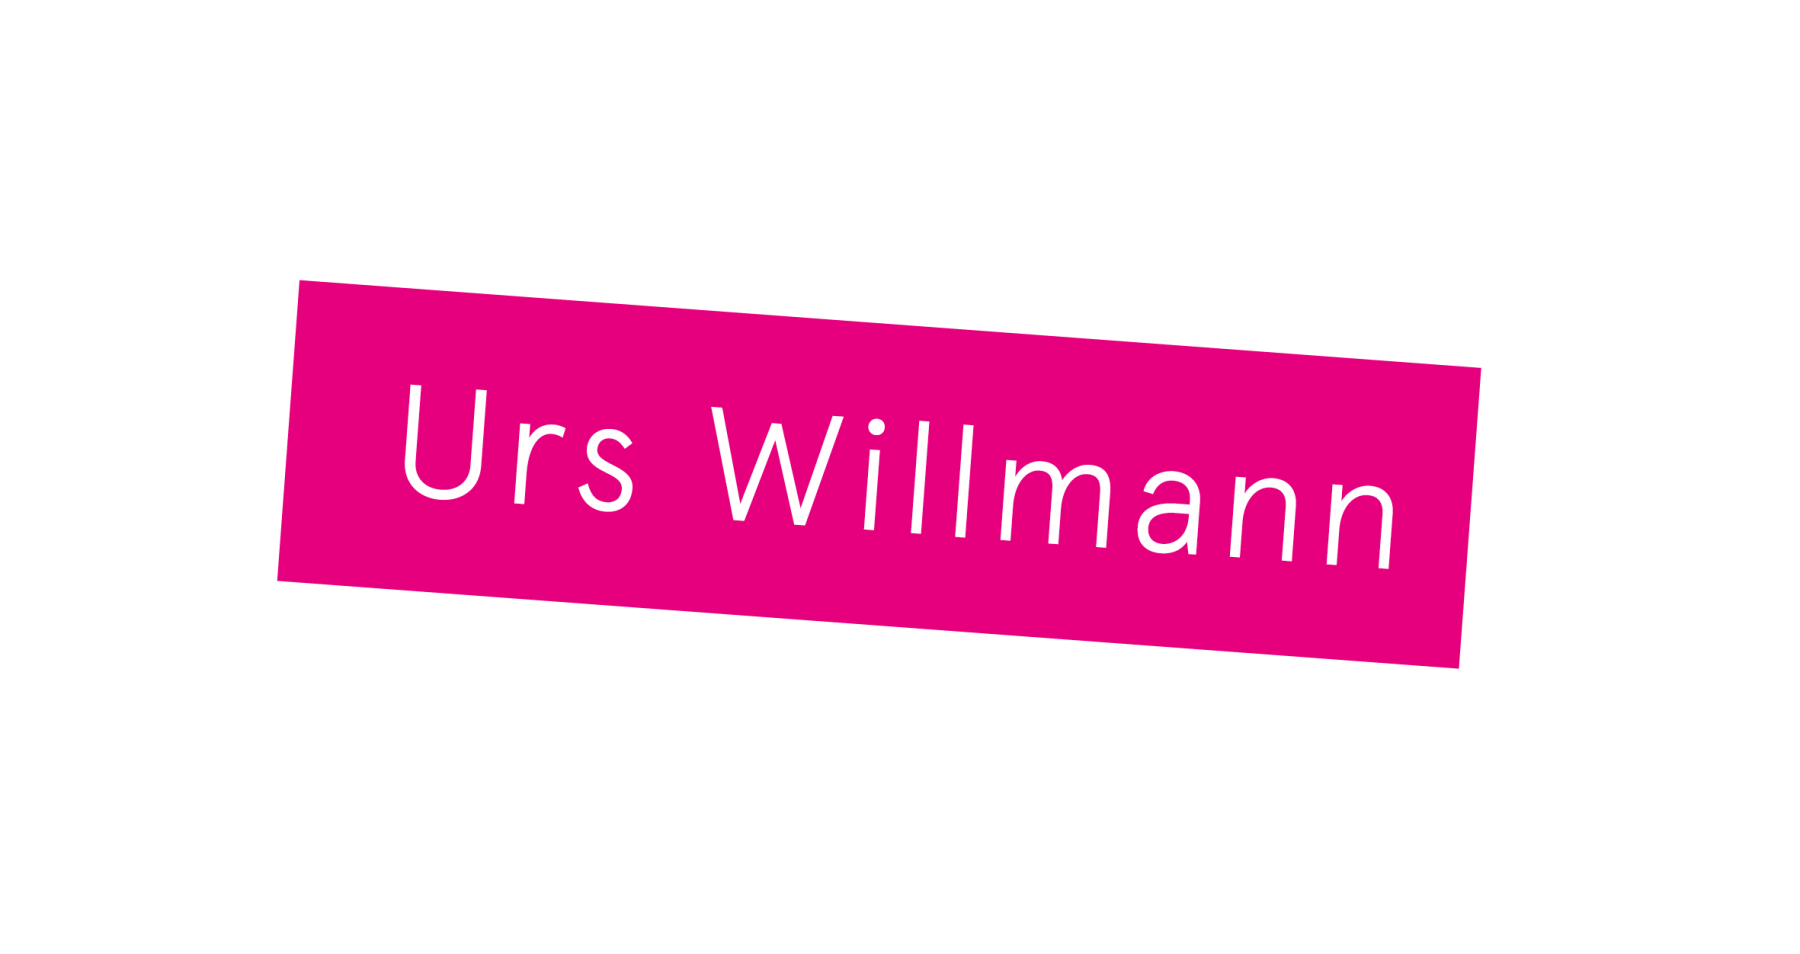 Urs Willman